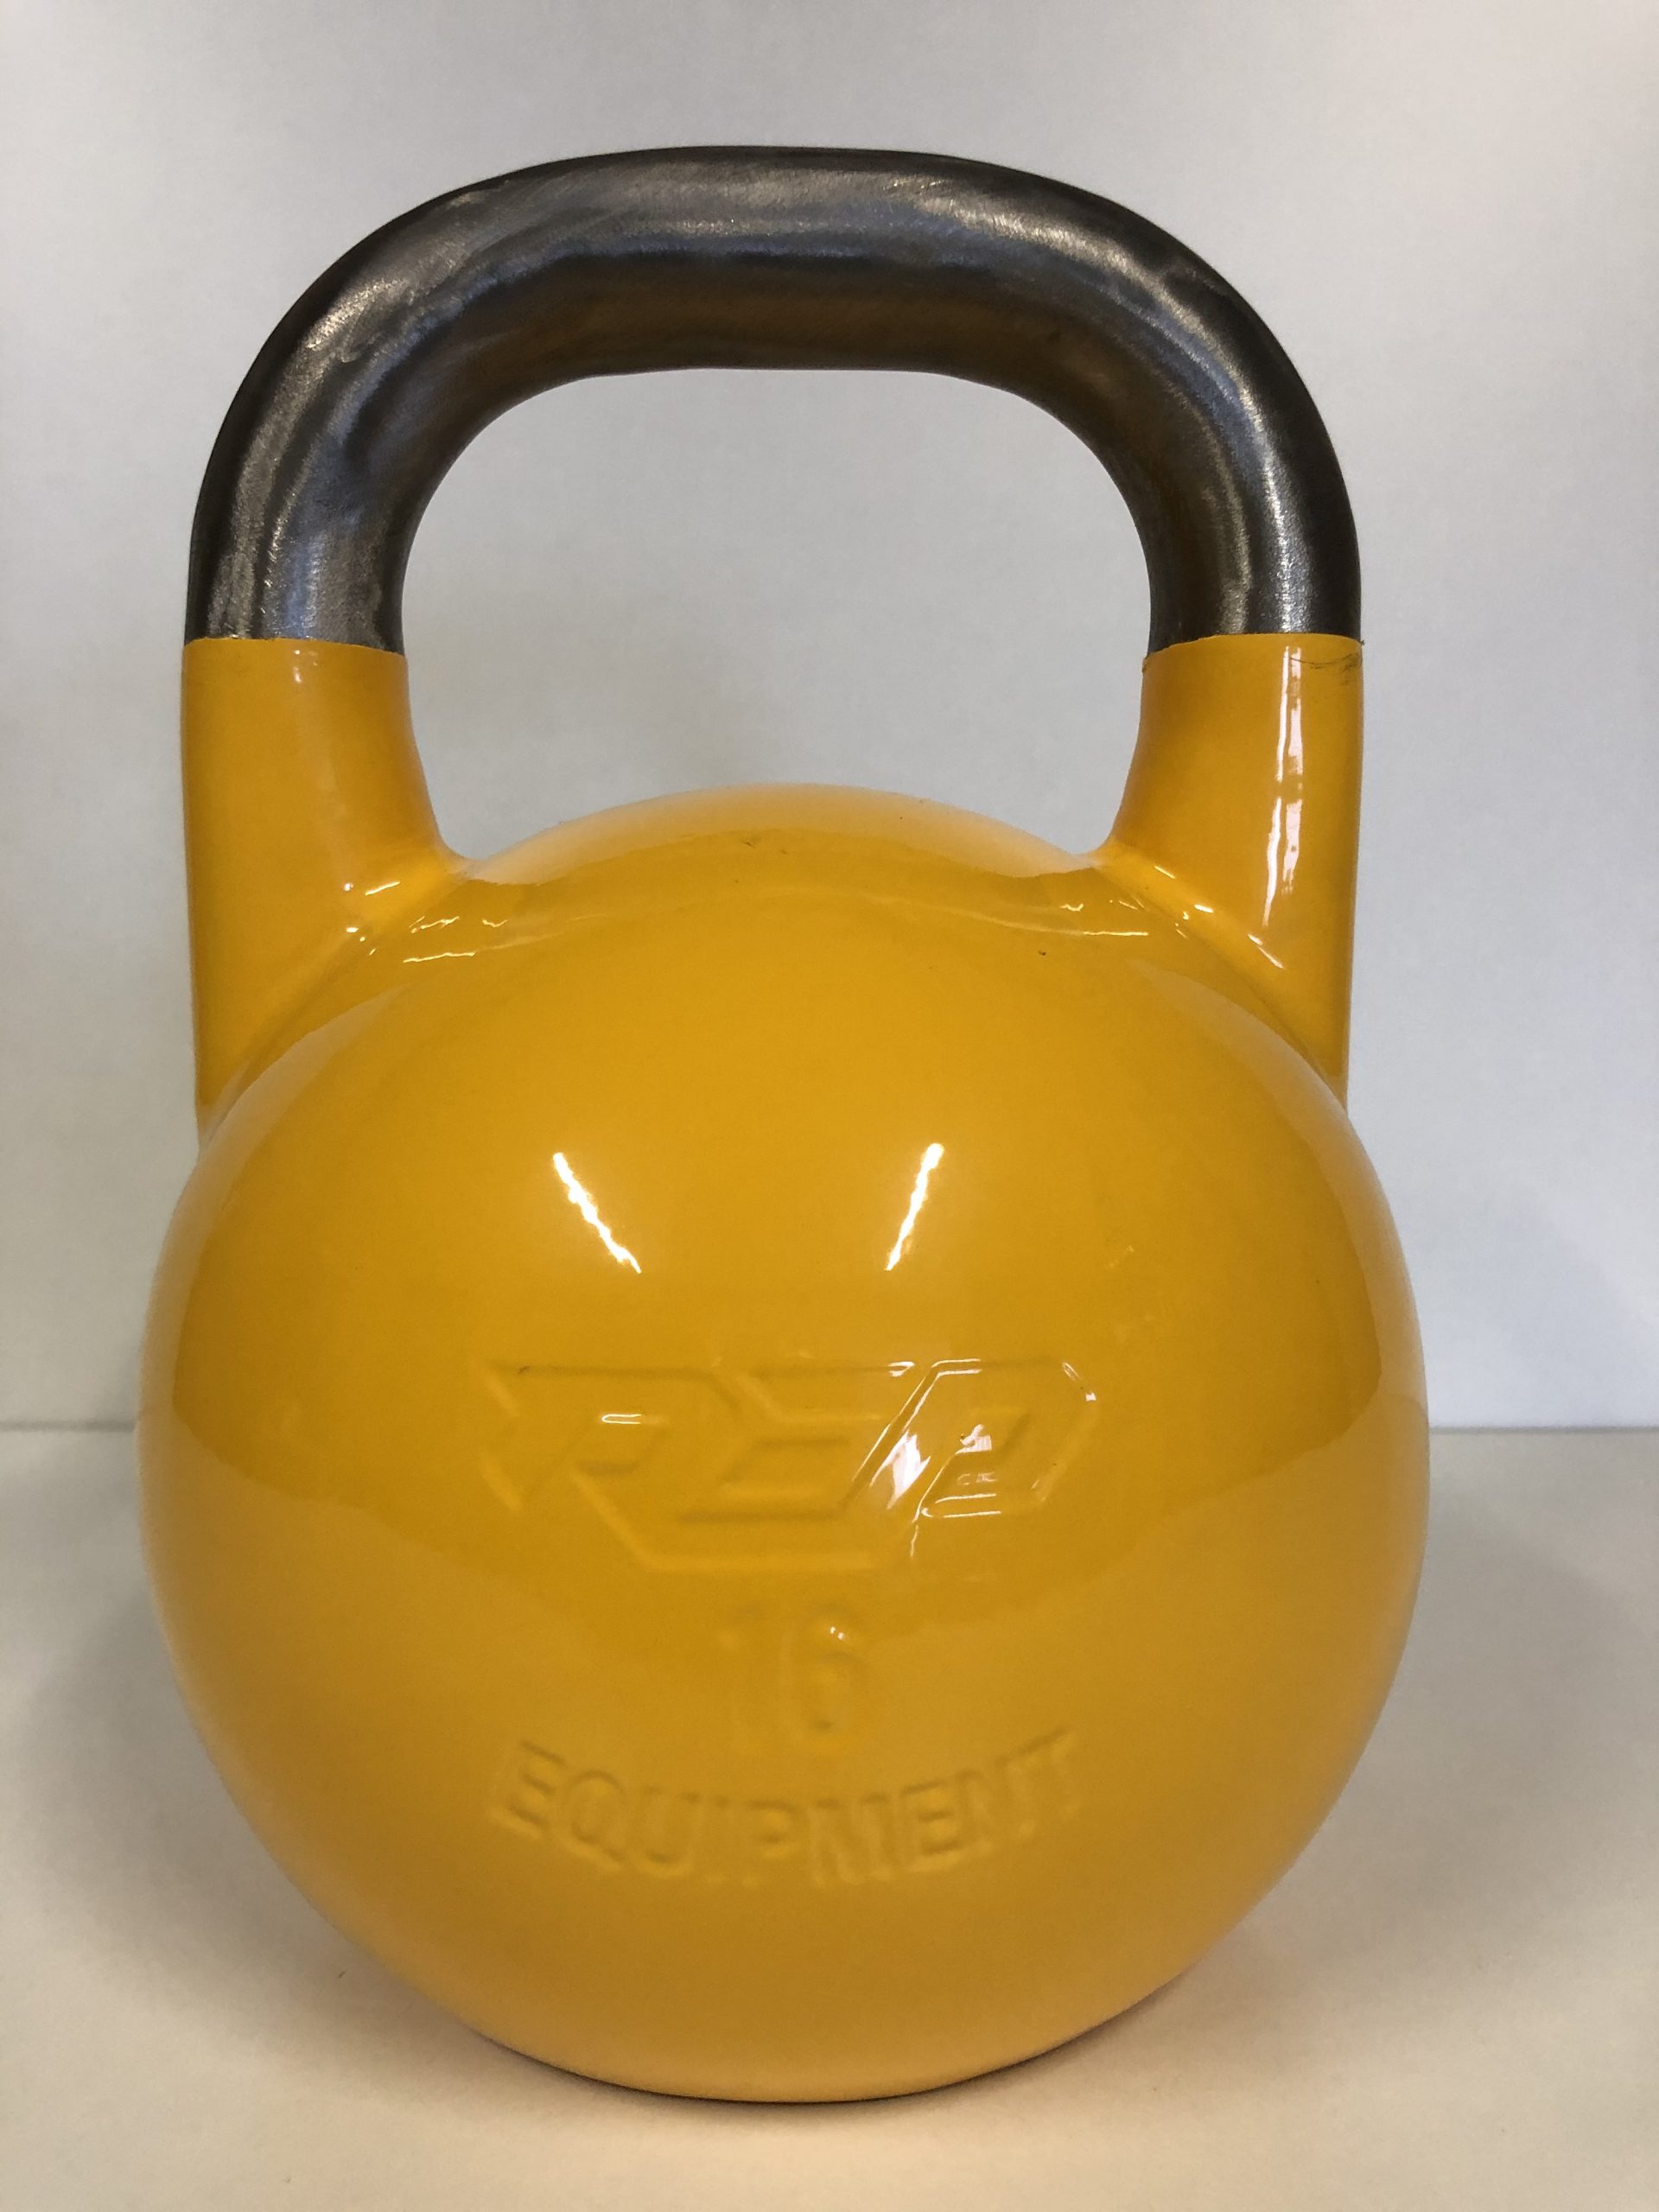 PRO Kettlebell Steel Competition 16kg, Unisex – Erwachsene Kettlebell,  Yellow, one size 